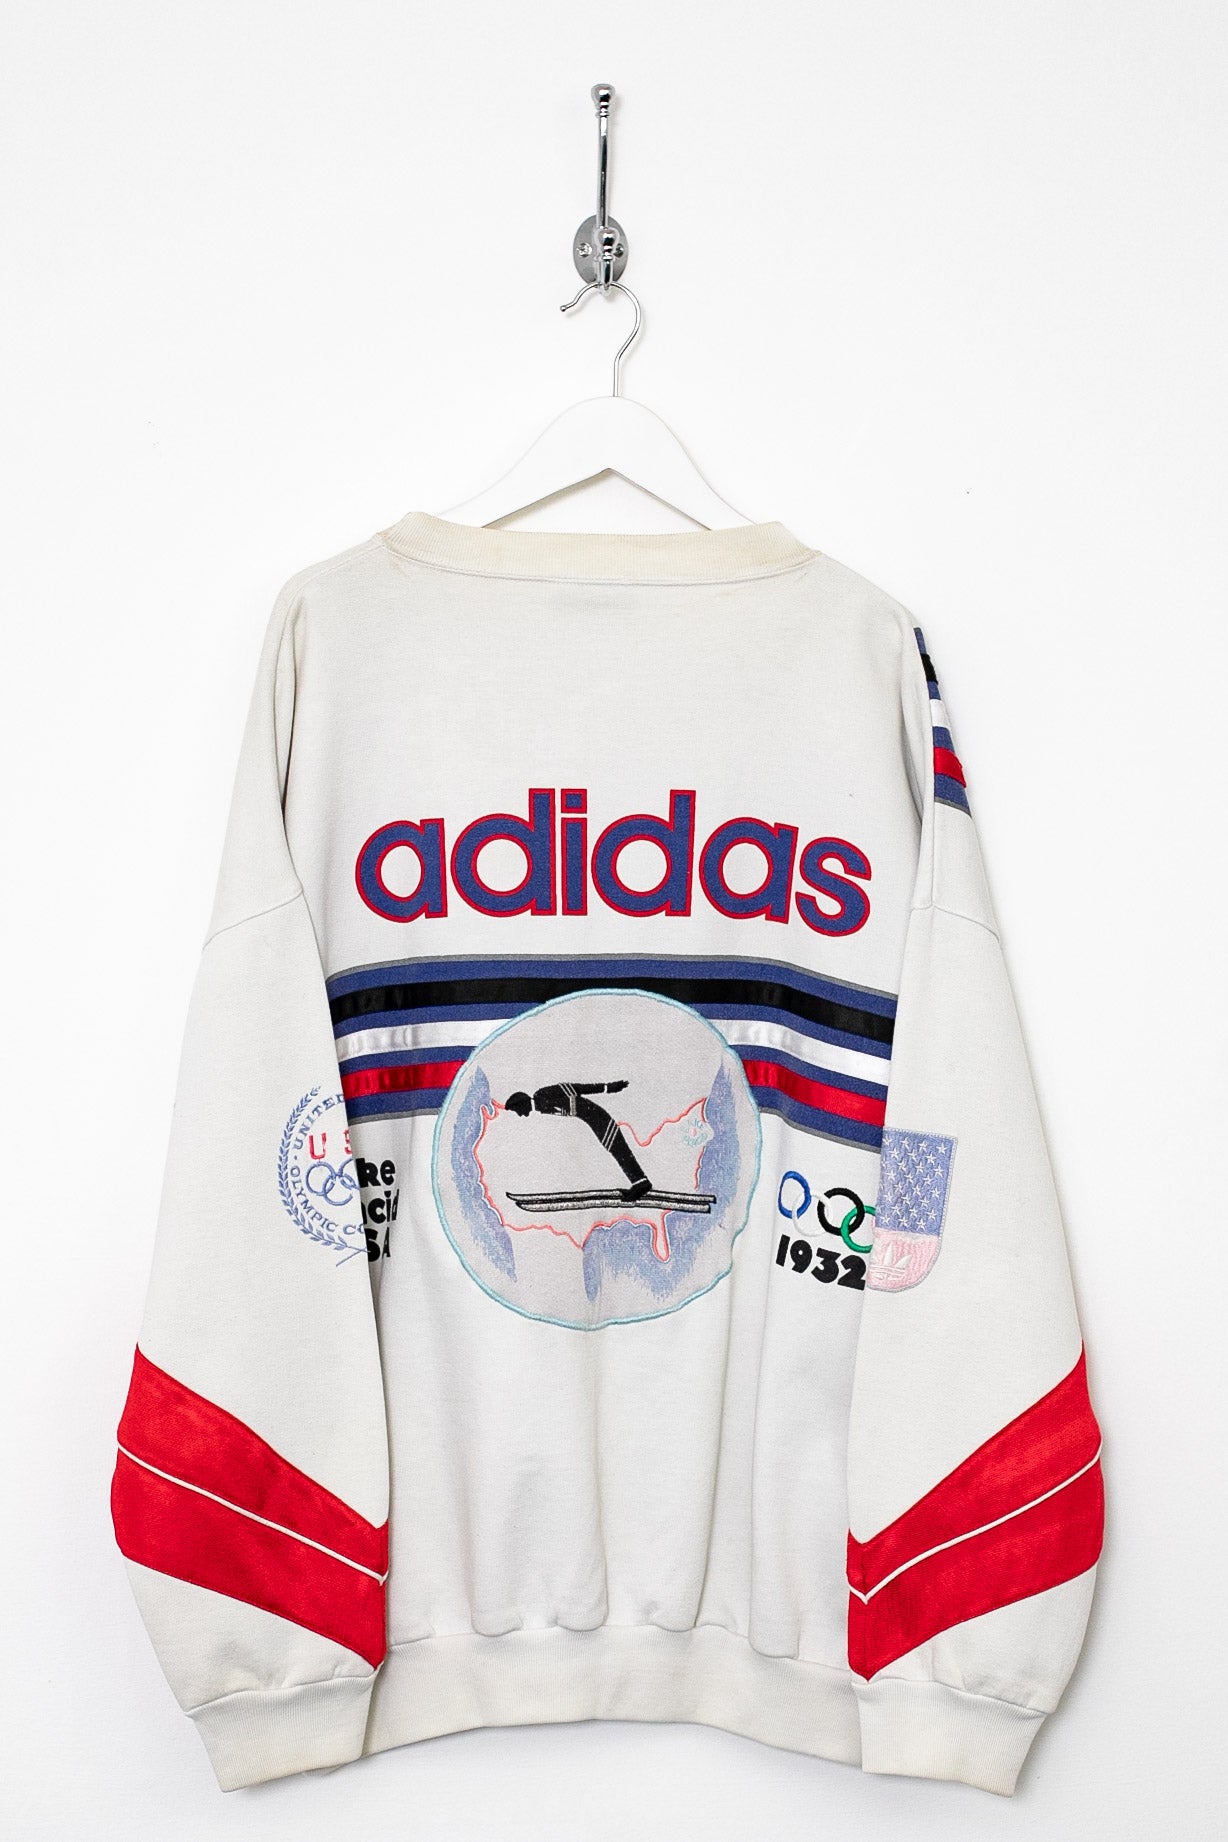 Rare 80s Adidas Olympics Sweatshirt (L)